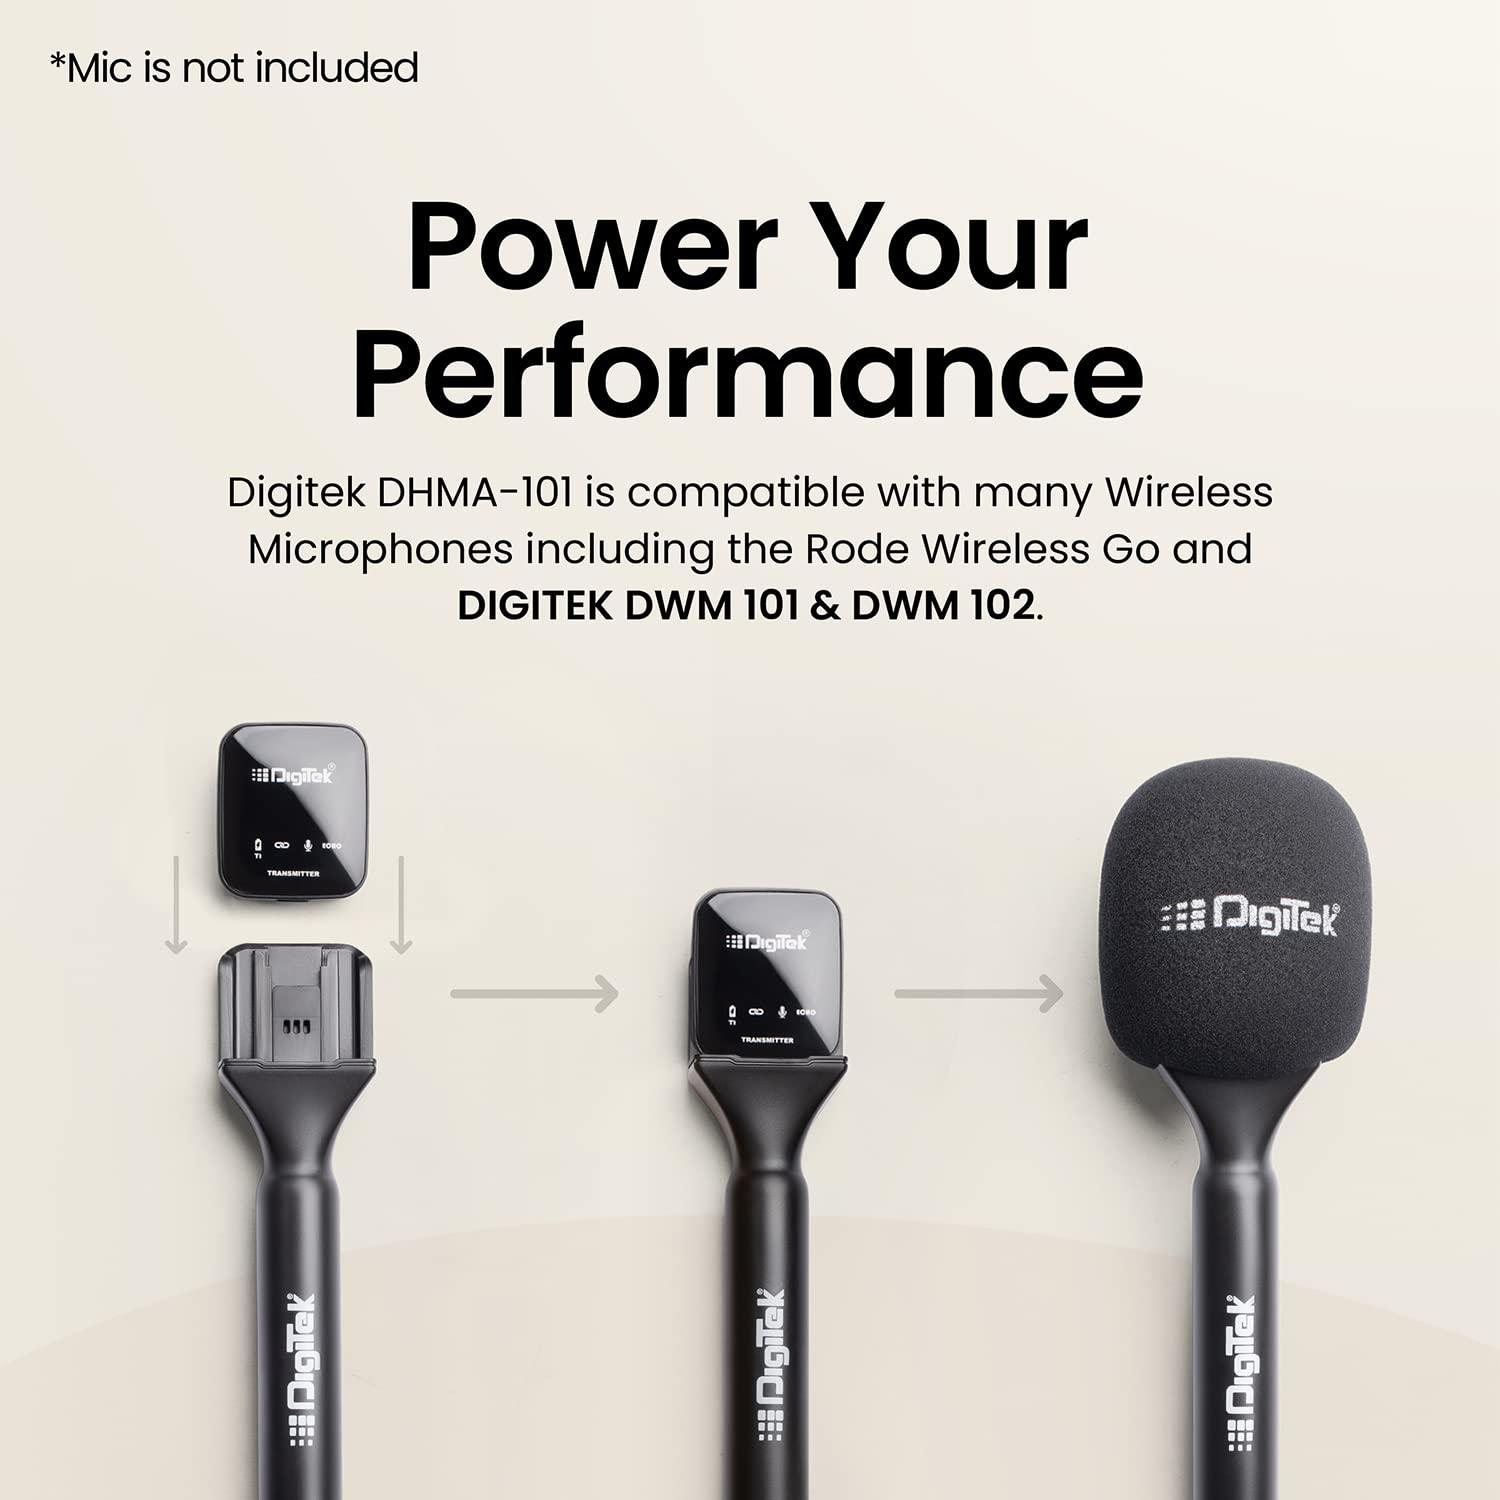 Digitek (DHMA-101) Interview Adapter Compatible with DWM 101 & Other Wireless GO Trensmitter DHMA-101 Includes a Foam Windshield to Reduce Wind Noise - Digitek